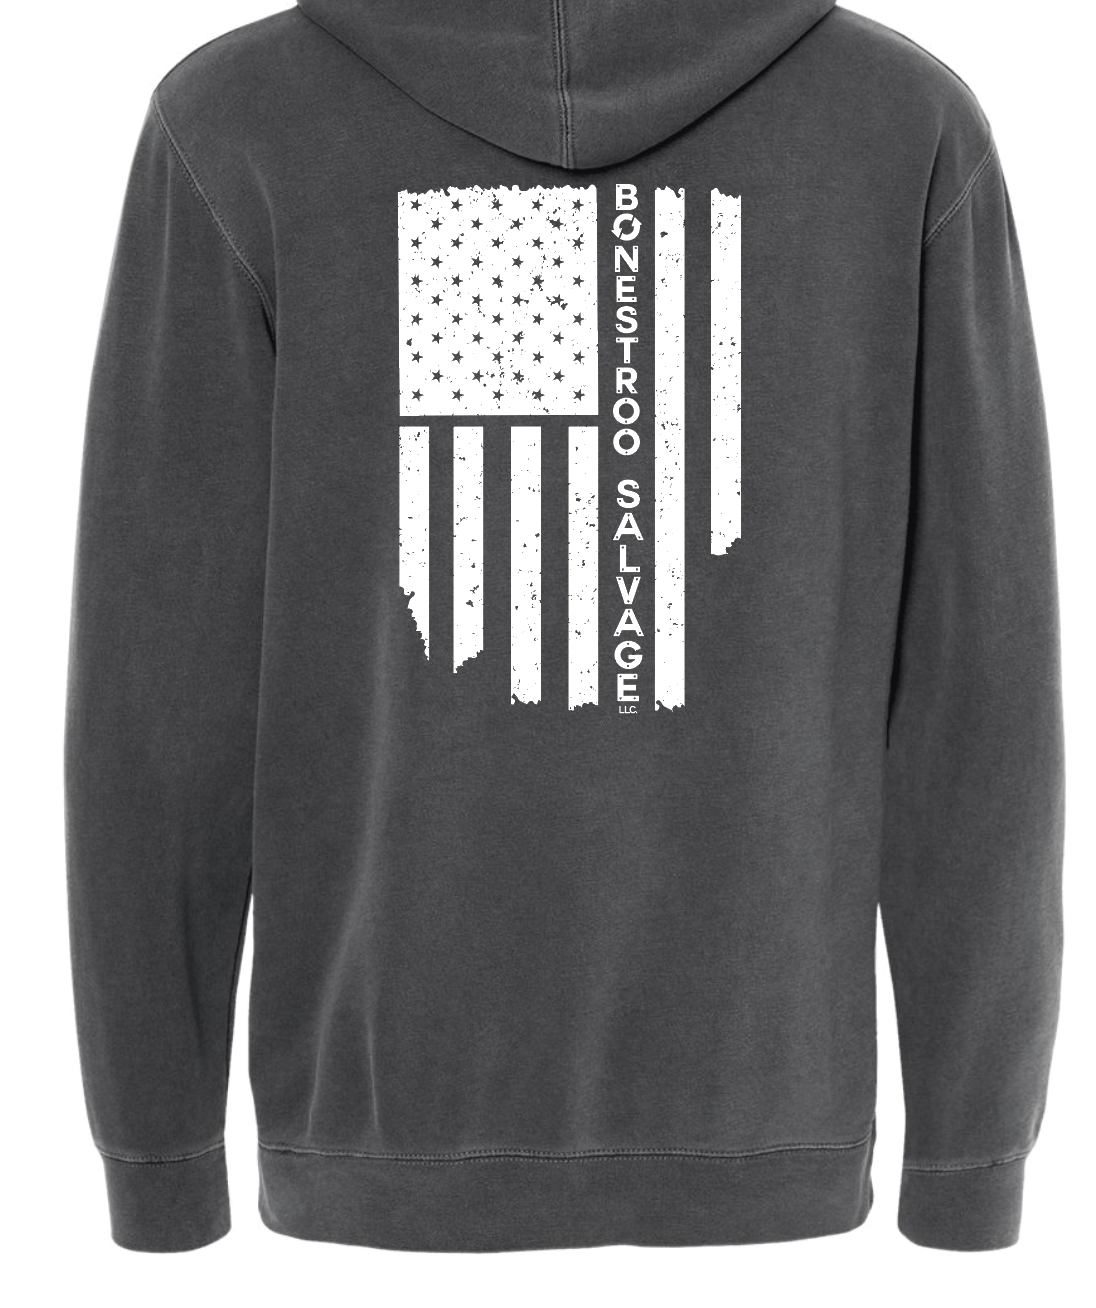 Flag Imprint YOUTH Independent Hooded Sweatshirt | BONESTROO23